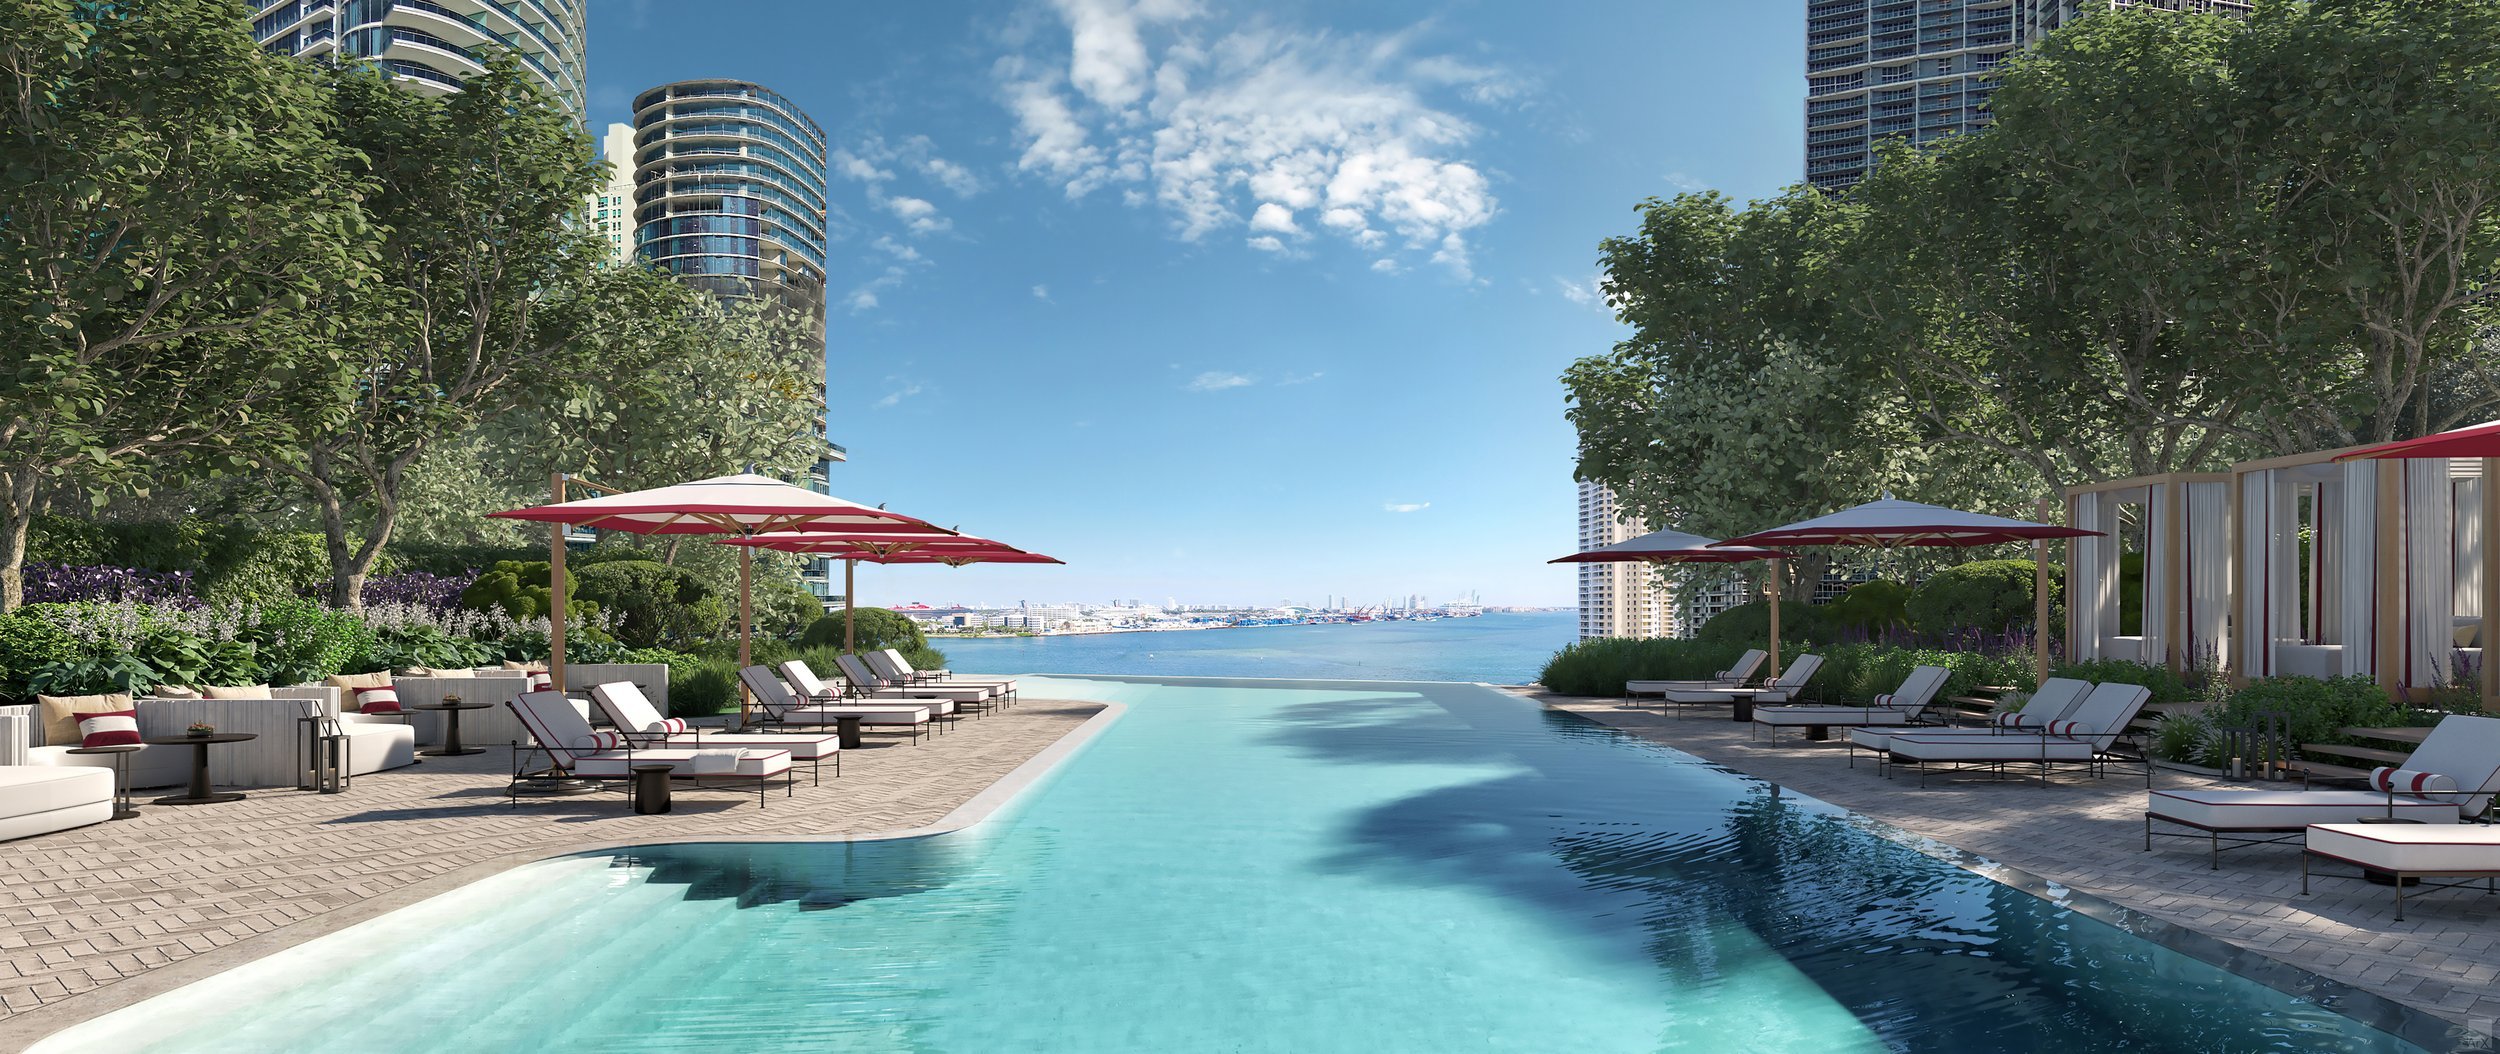 Baccarat+Residences+Miami,+A+Design+Showcase+Where+%22Life+Forever+Sparkles%22-3.jpeg